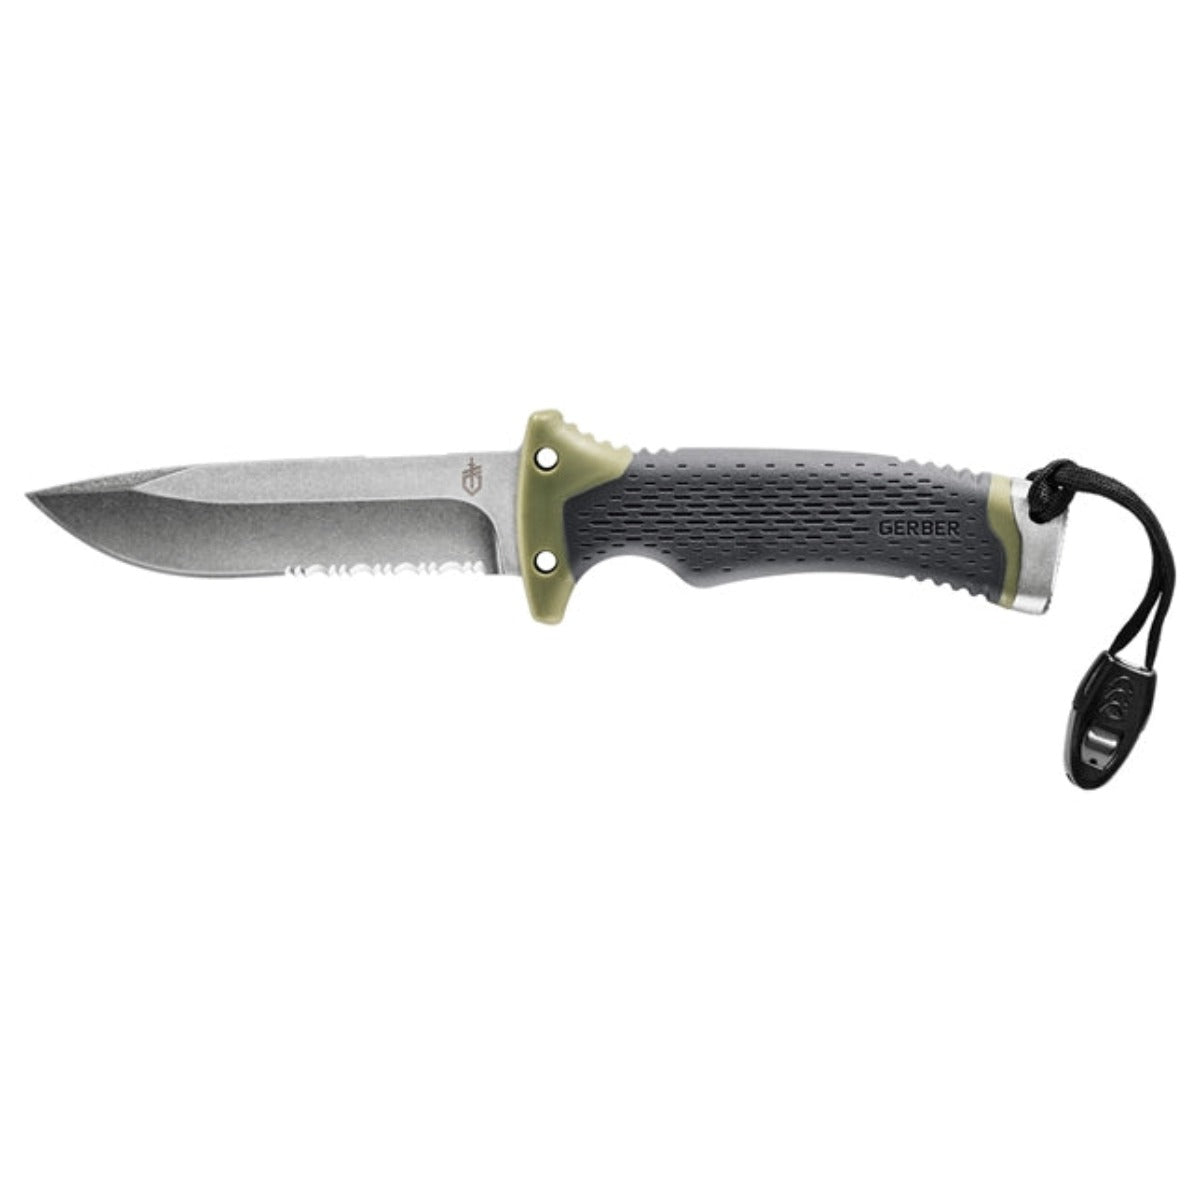 Gerber Ultimate Survival Fixed Blade Knife - 1